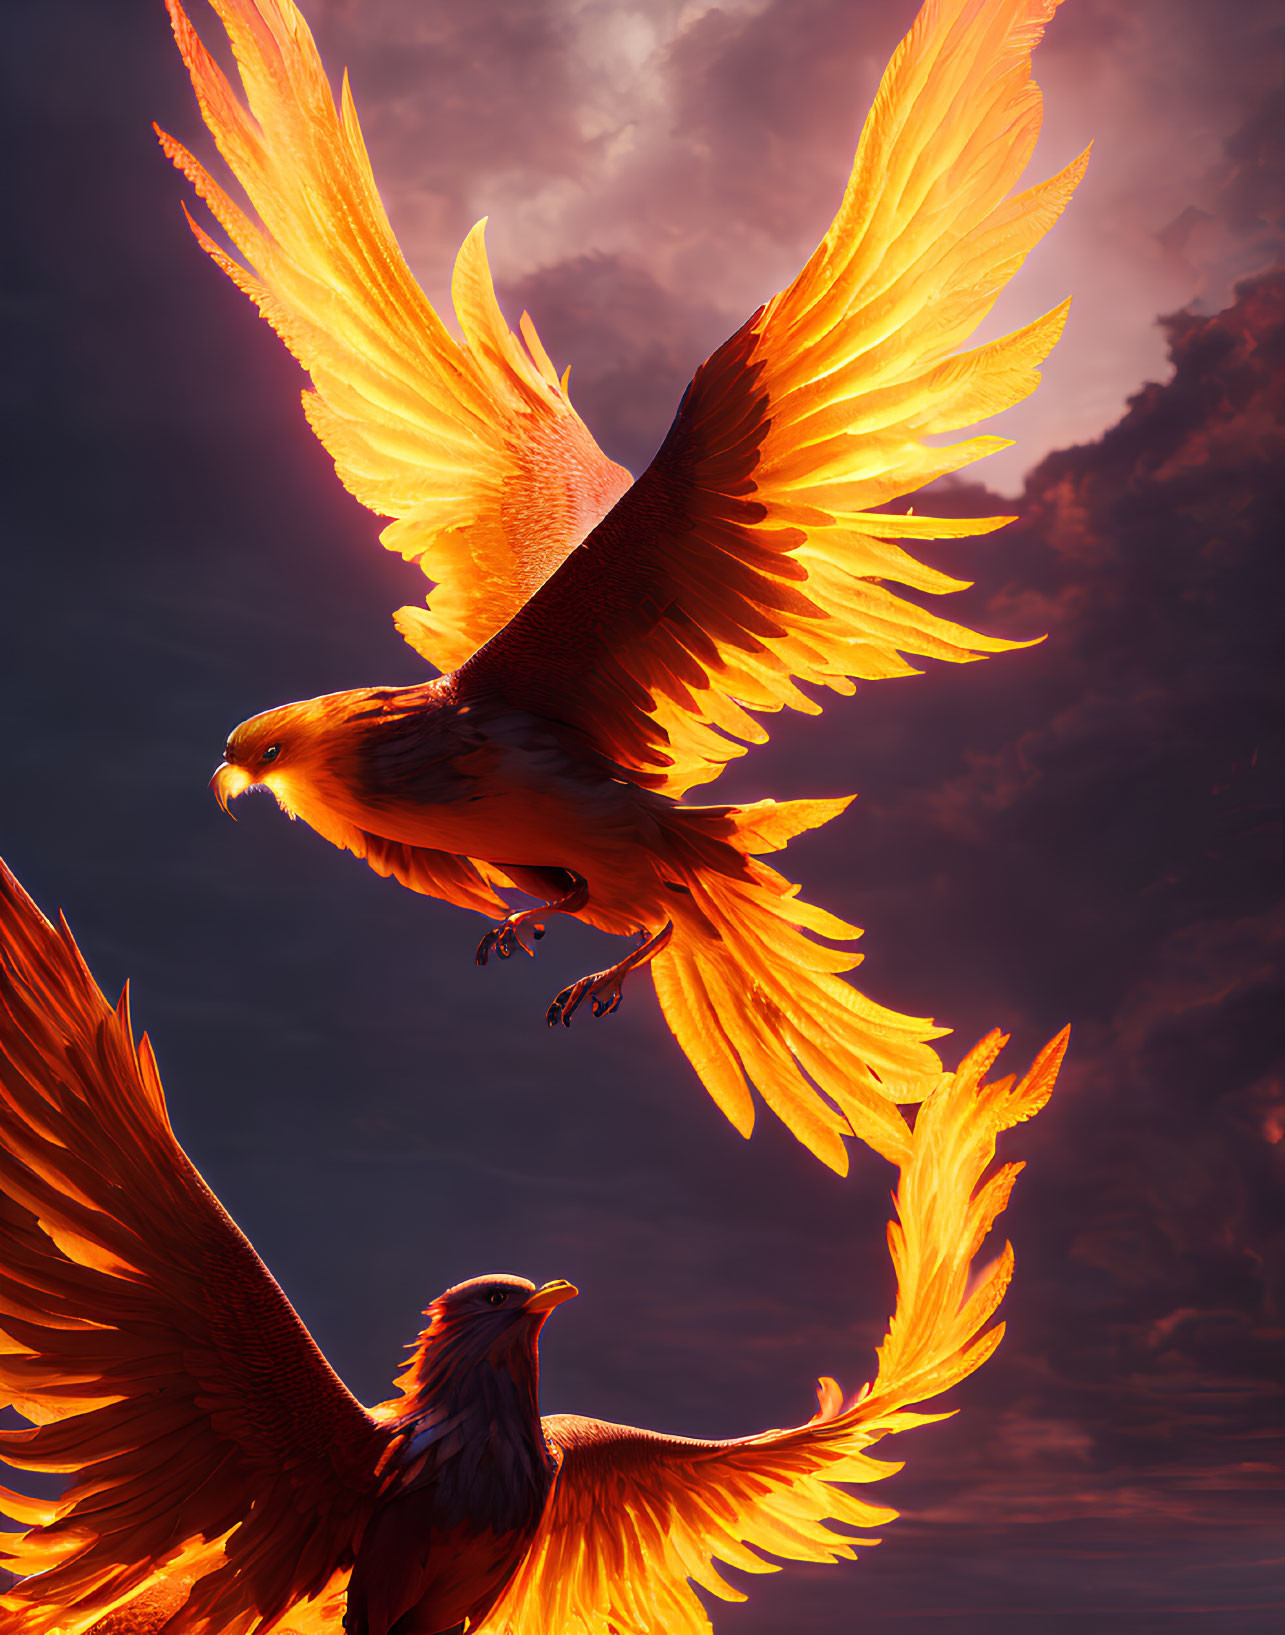 Majestic fiery phoenixes against dramatic reddish sky